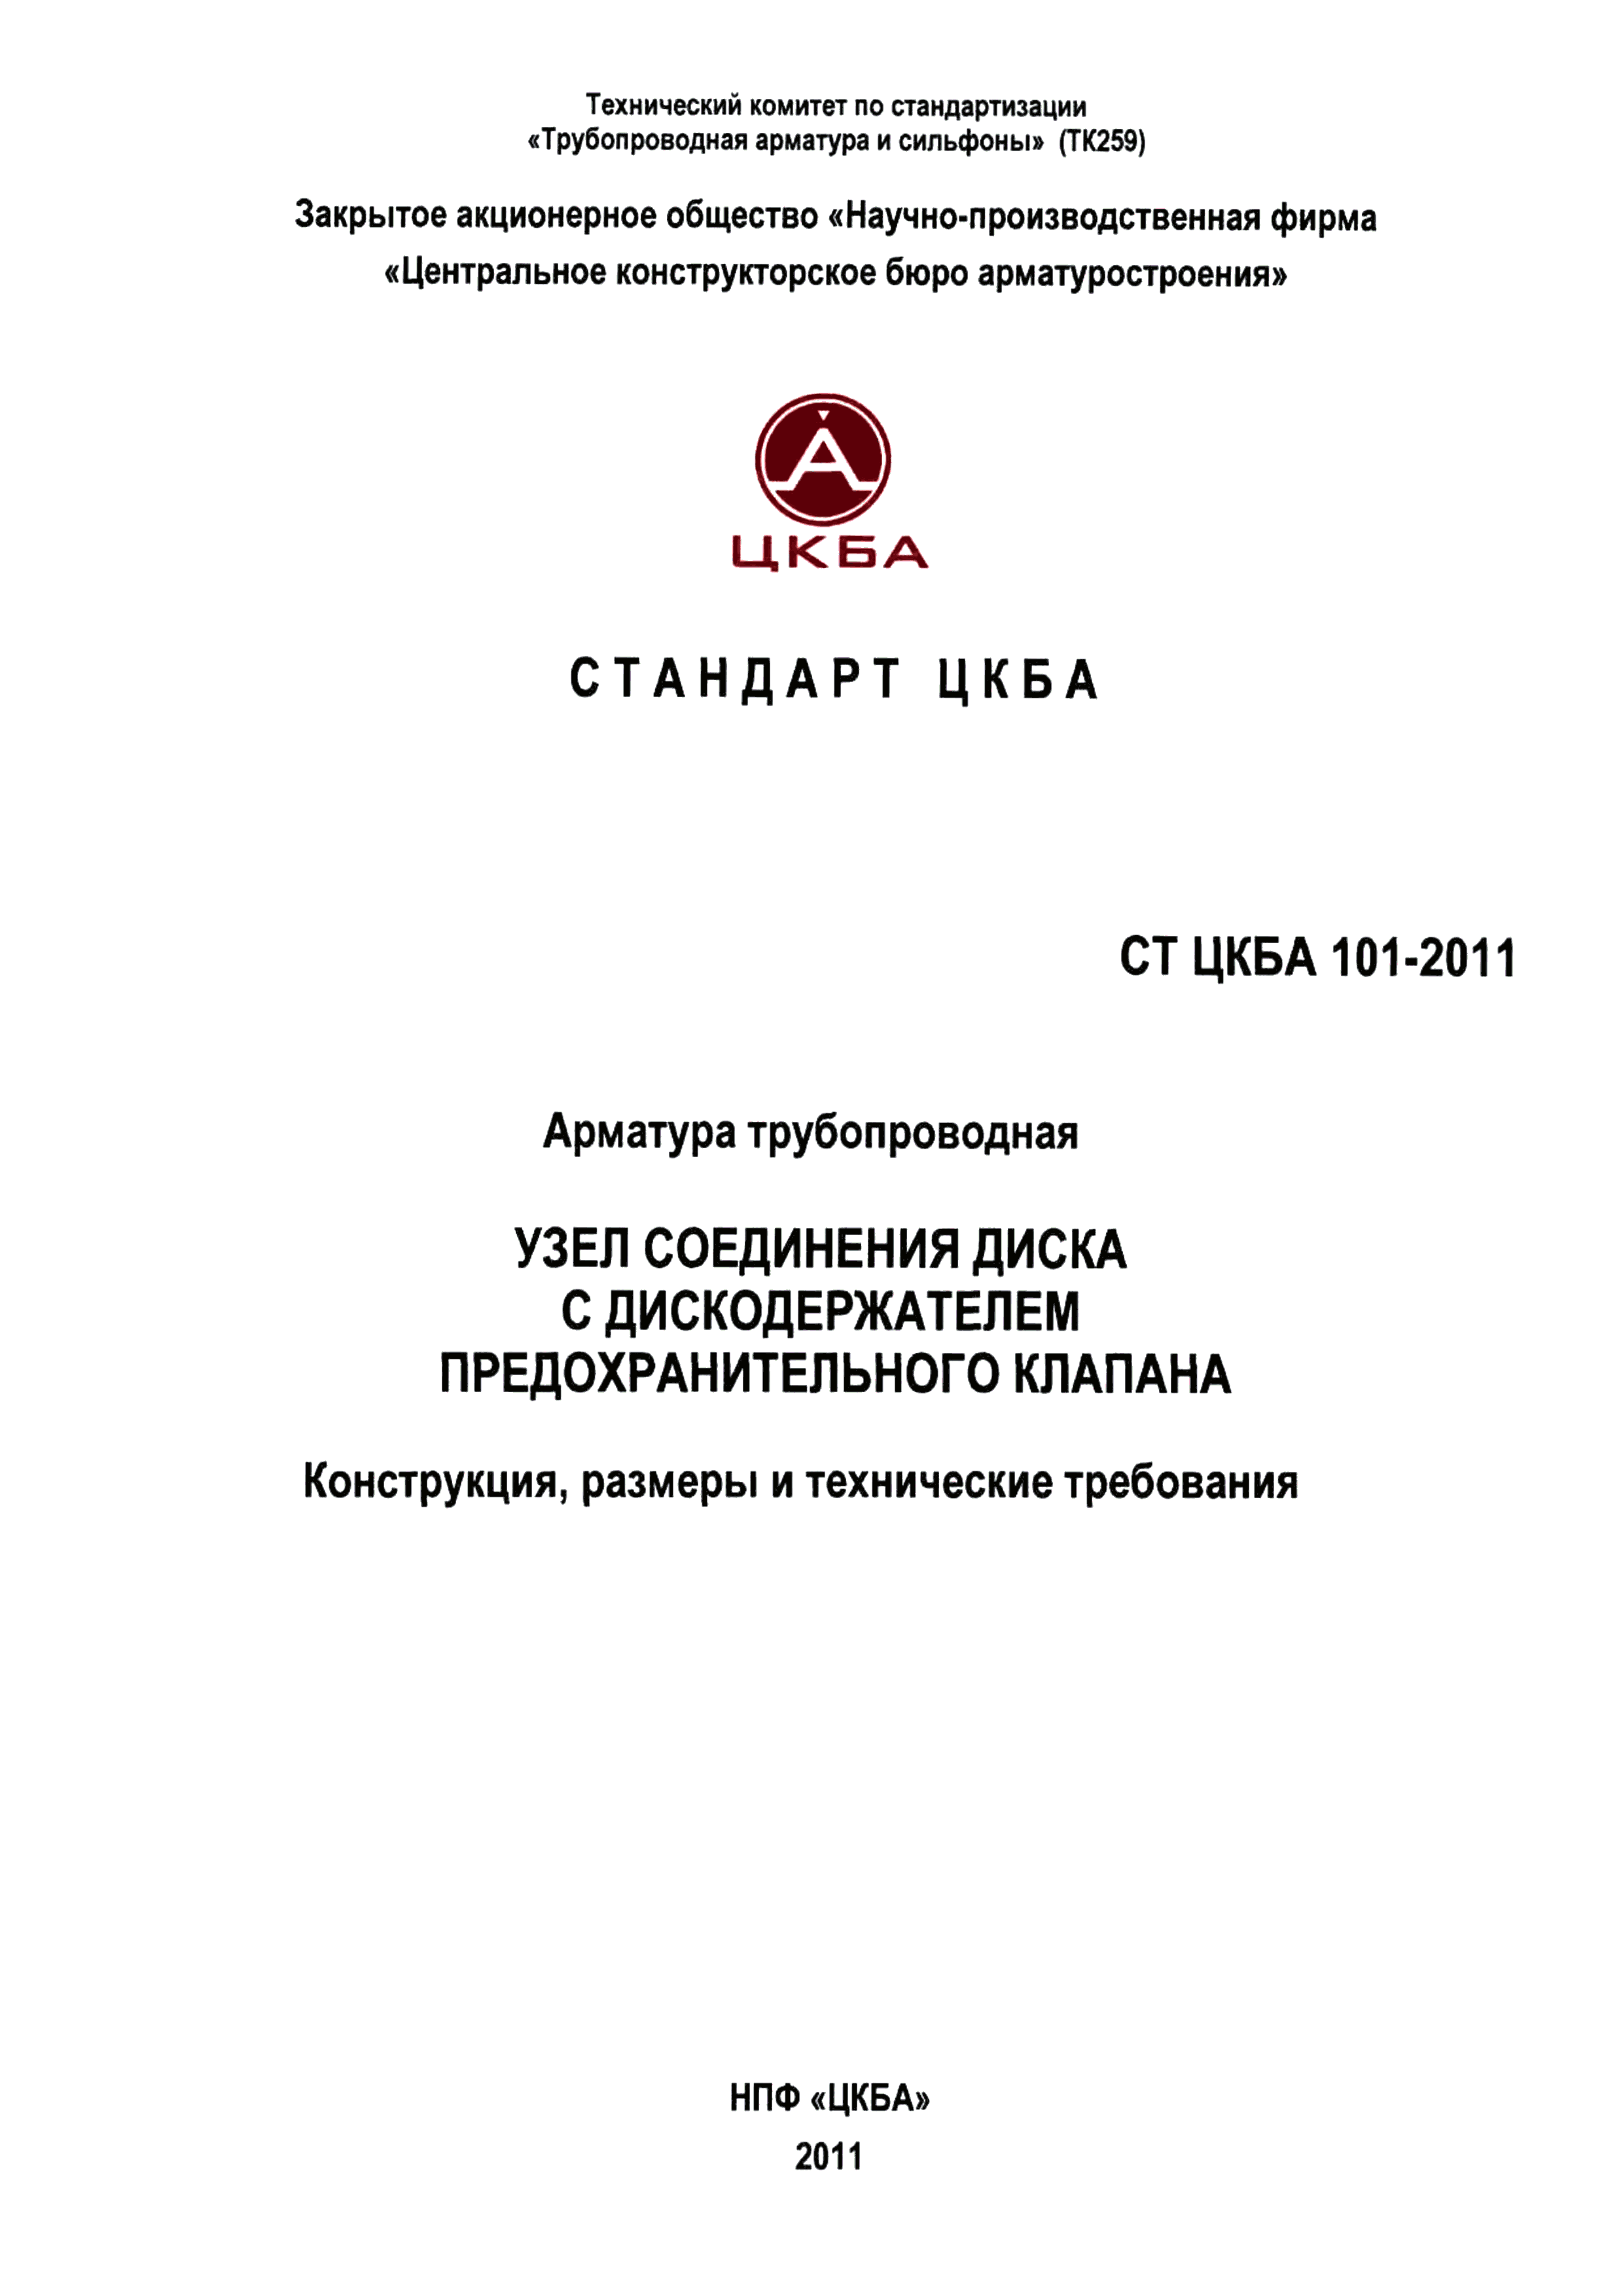 Ст ЦКБА 11-2004 арматура трубопроводная стандарт